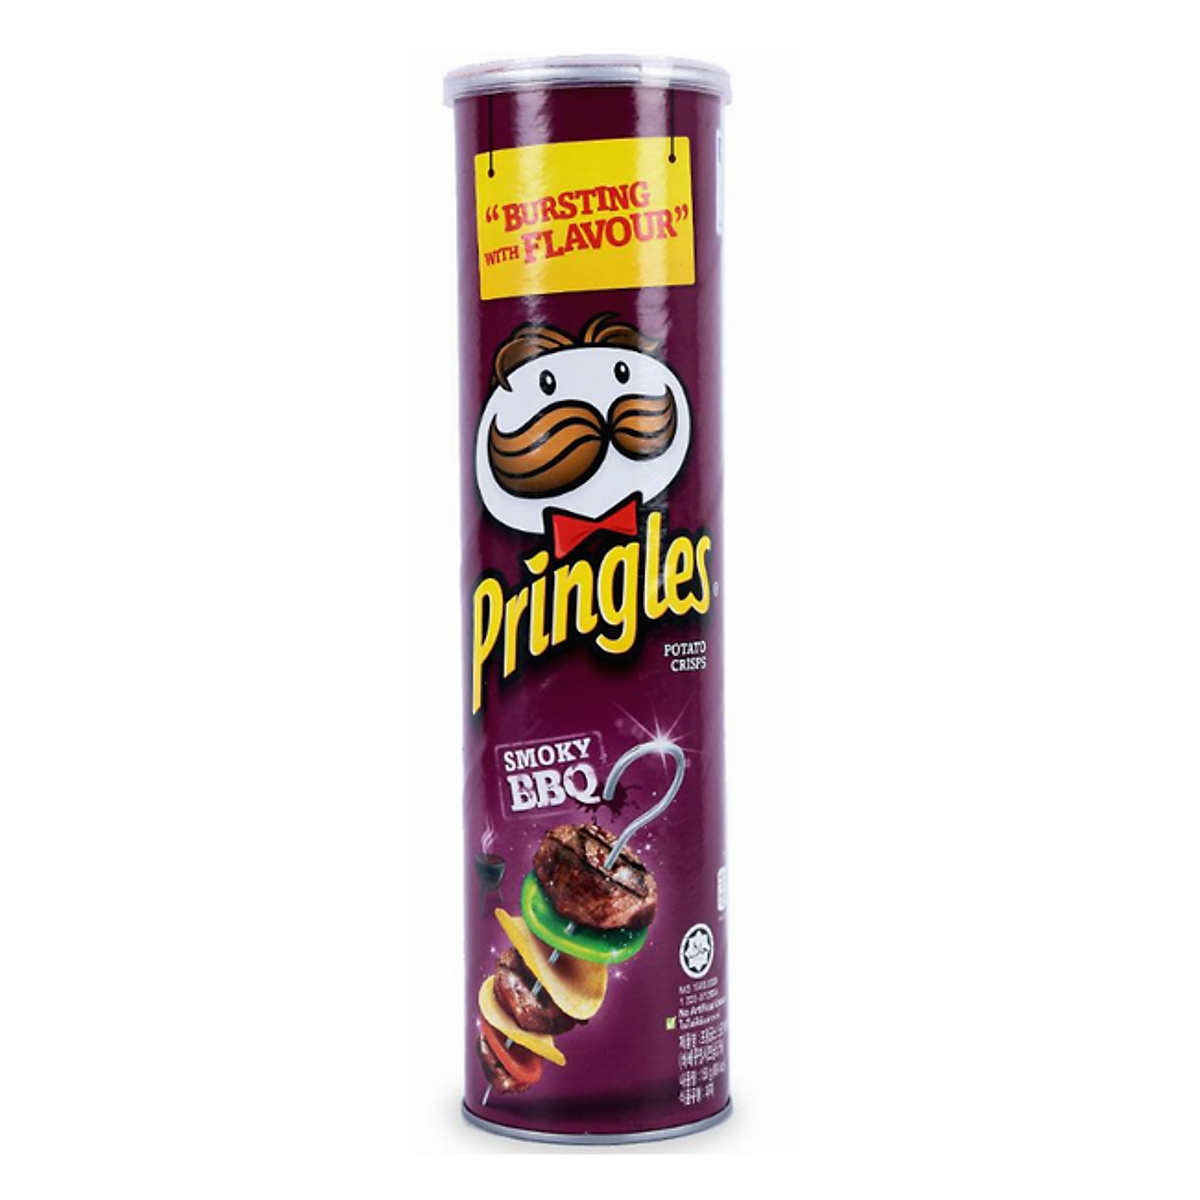 Pringles Snack Smoky BBQ